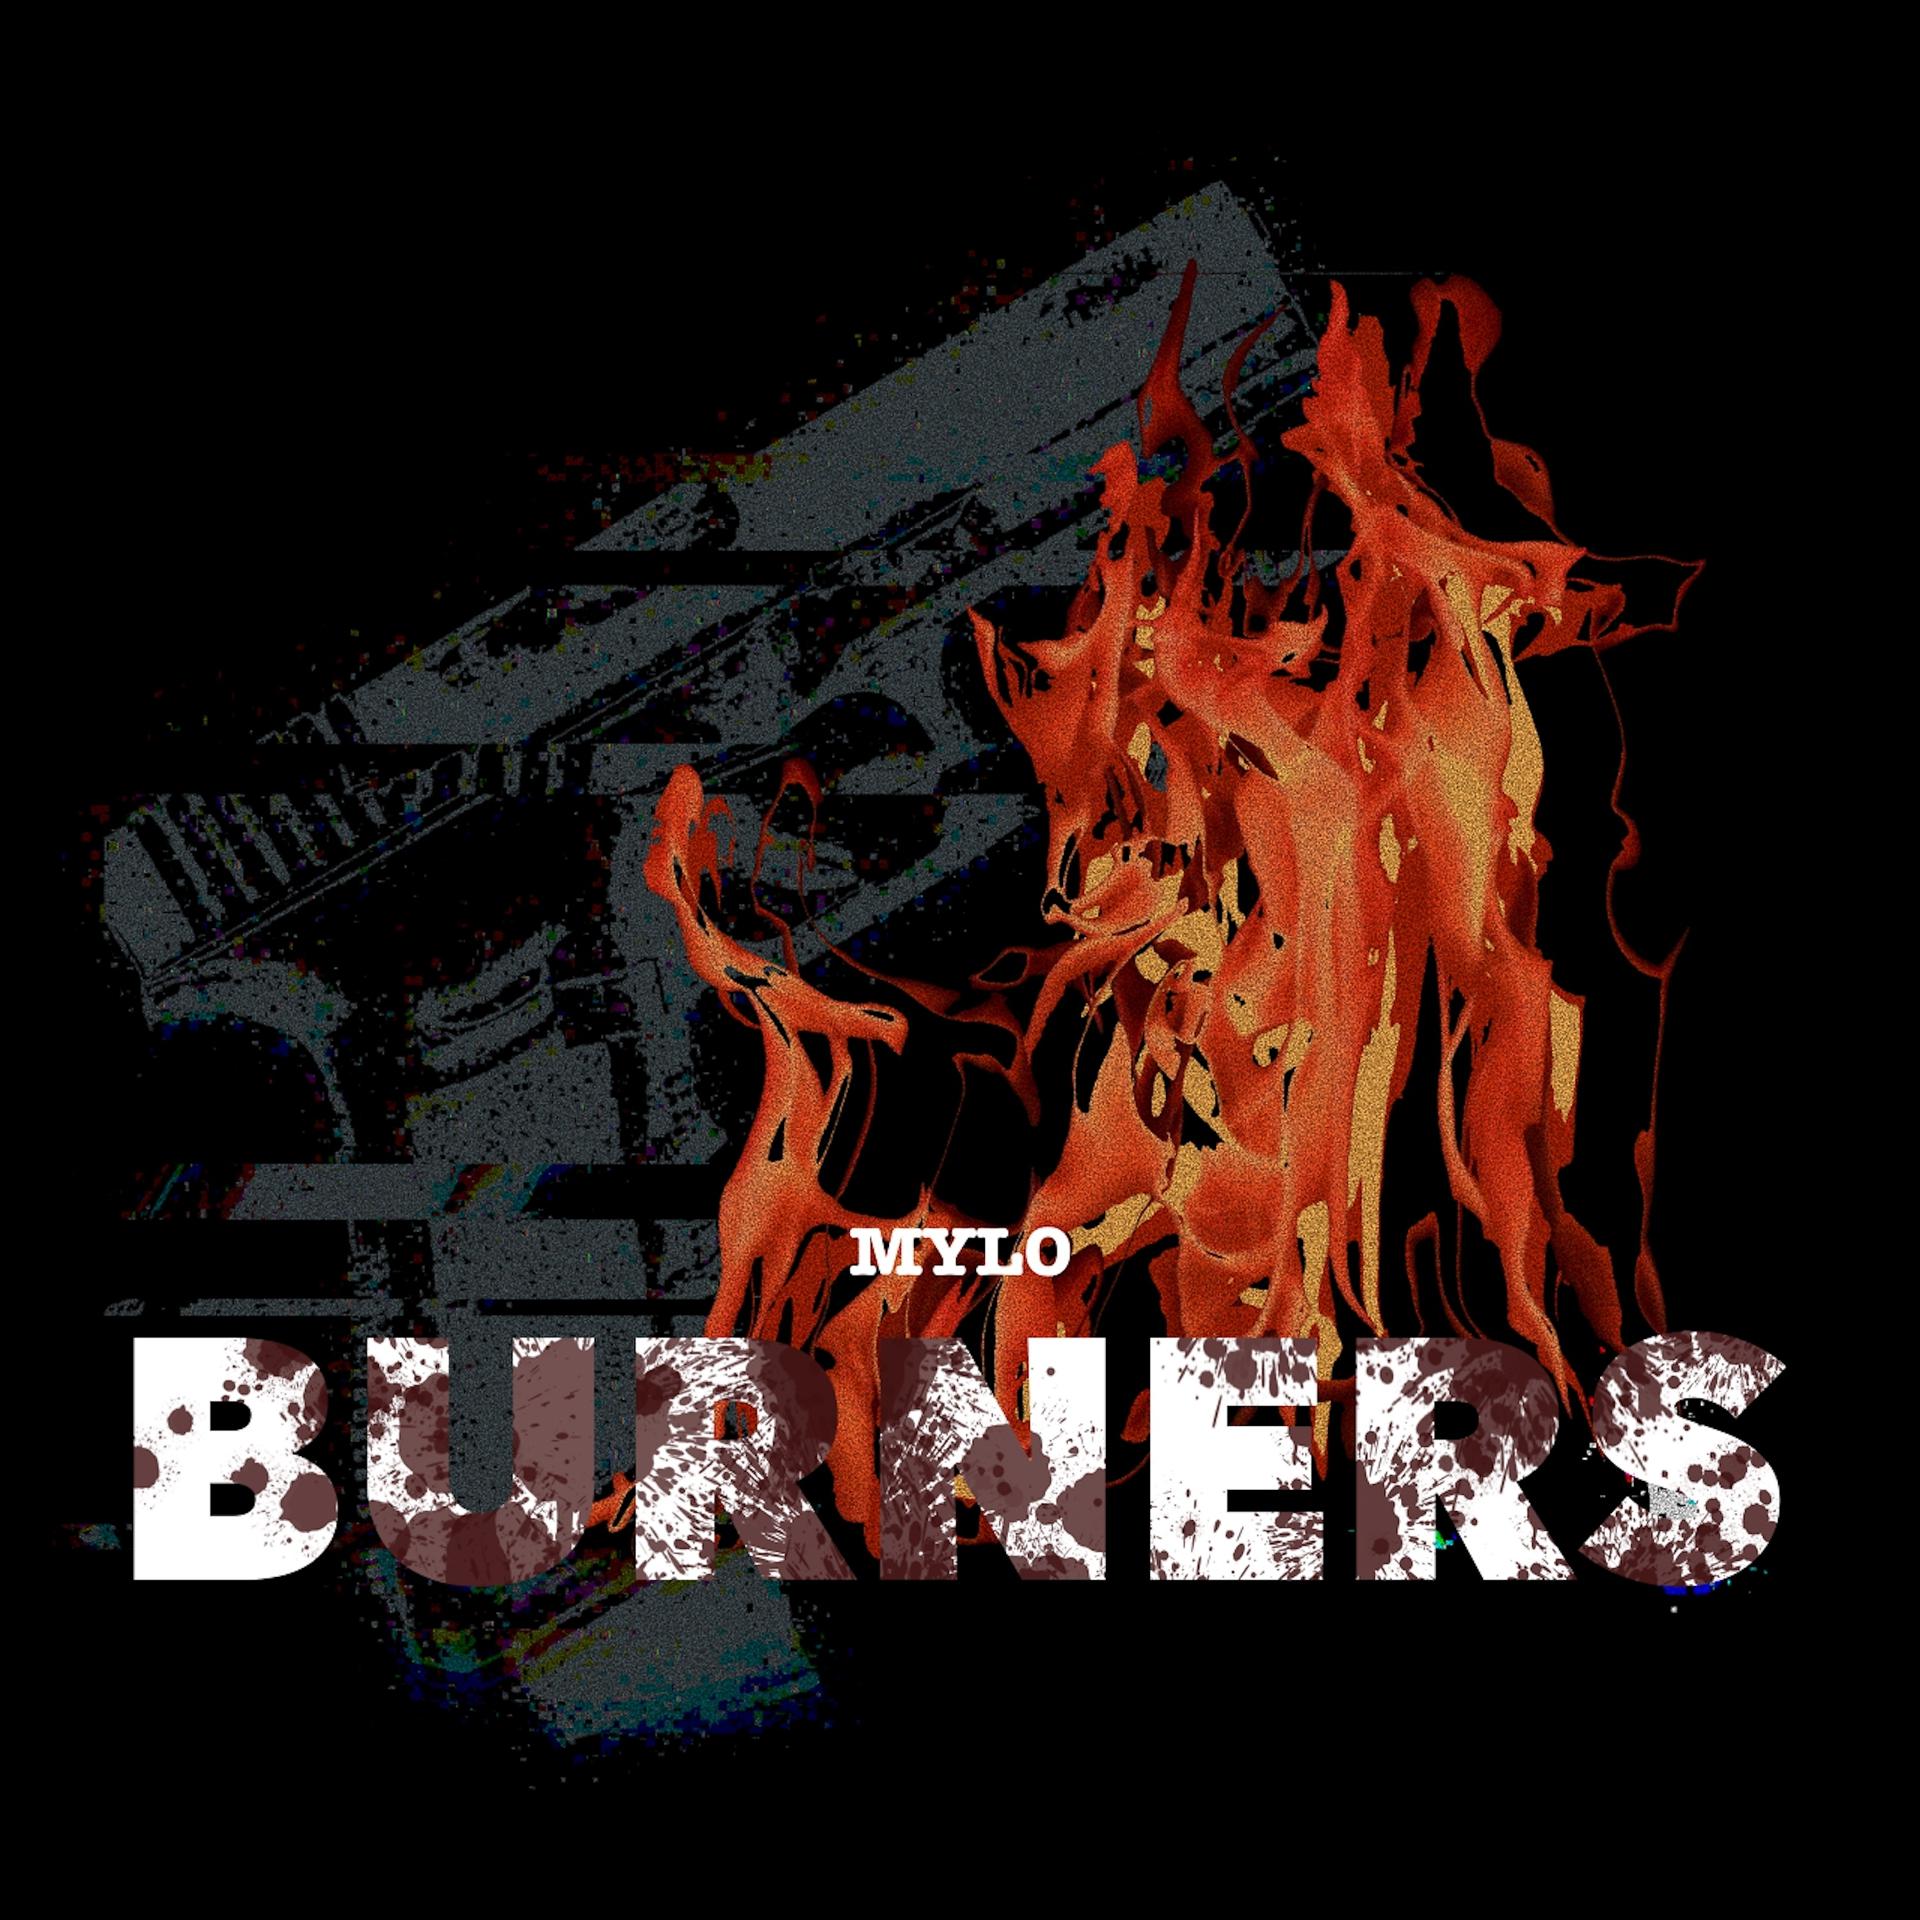 Постер альбома Burners